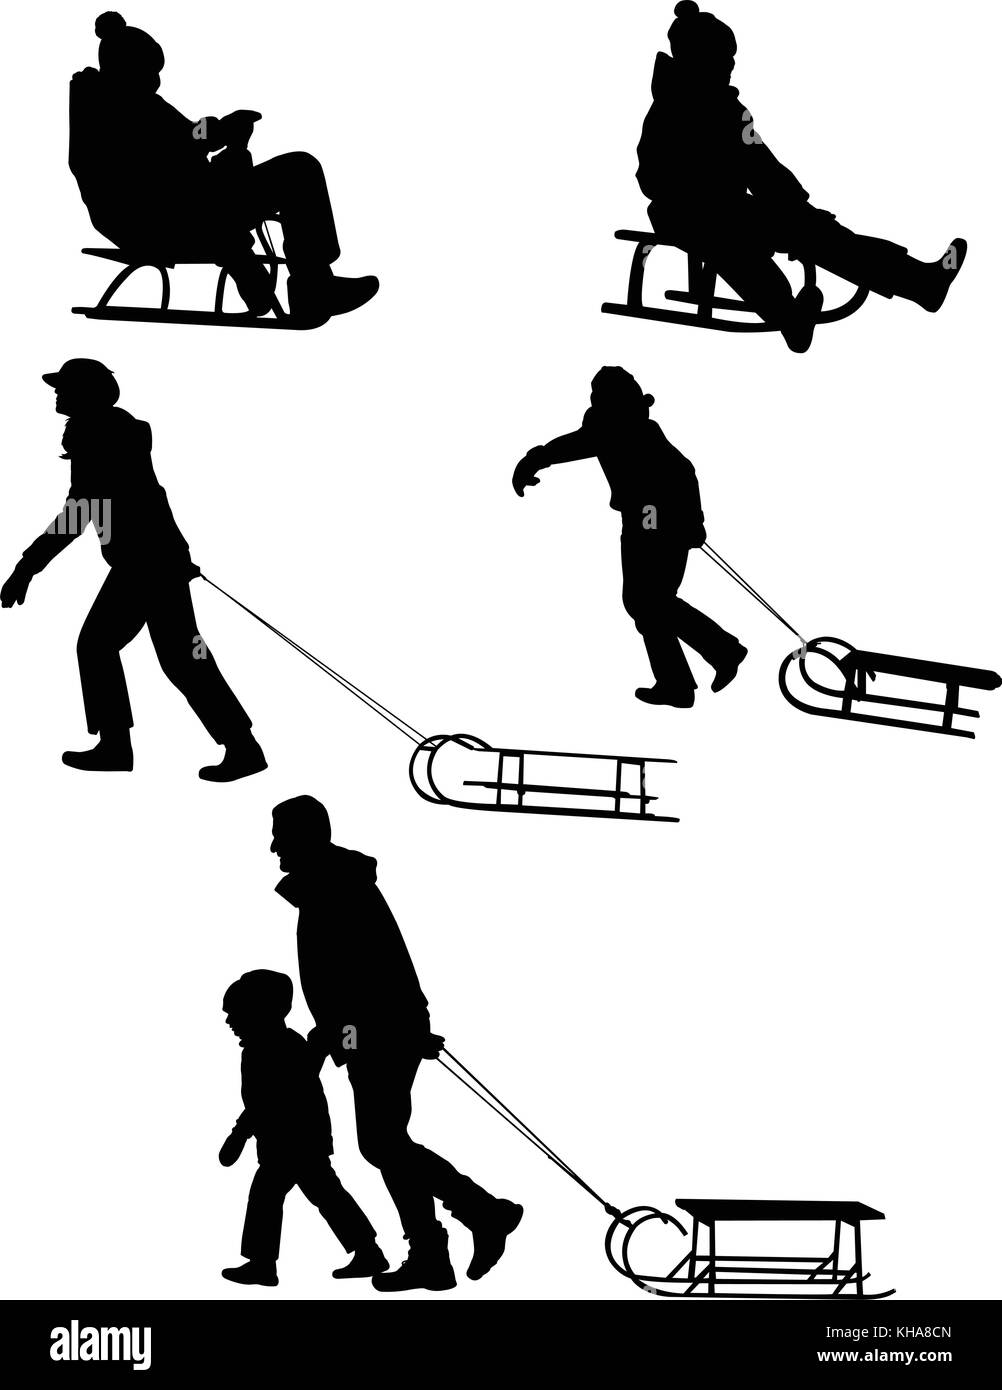 sledding silhouettes - vector Stock Vector